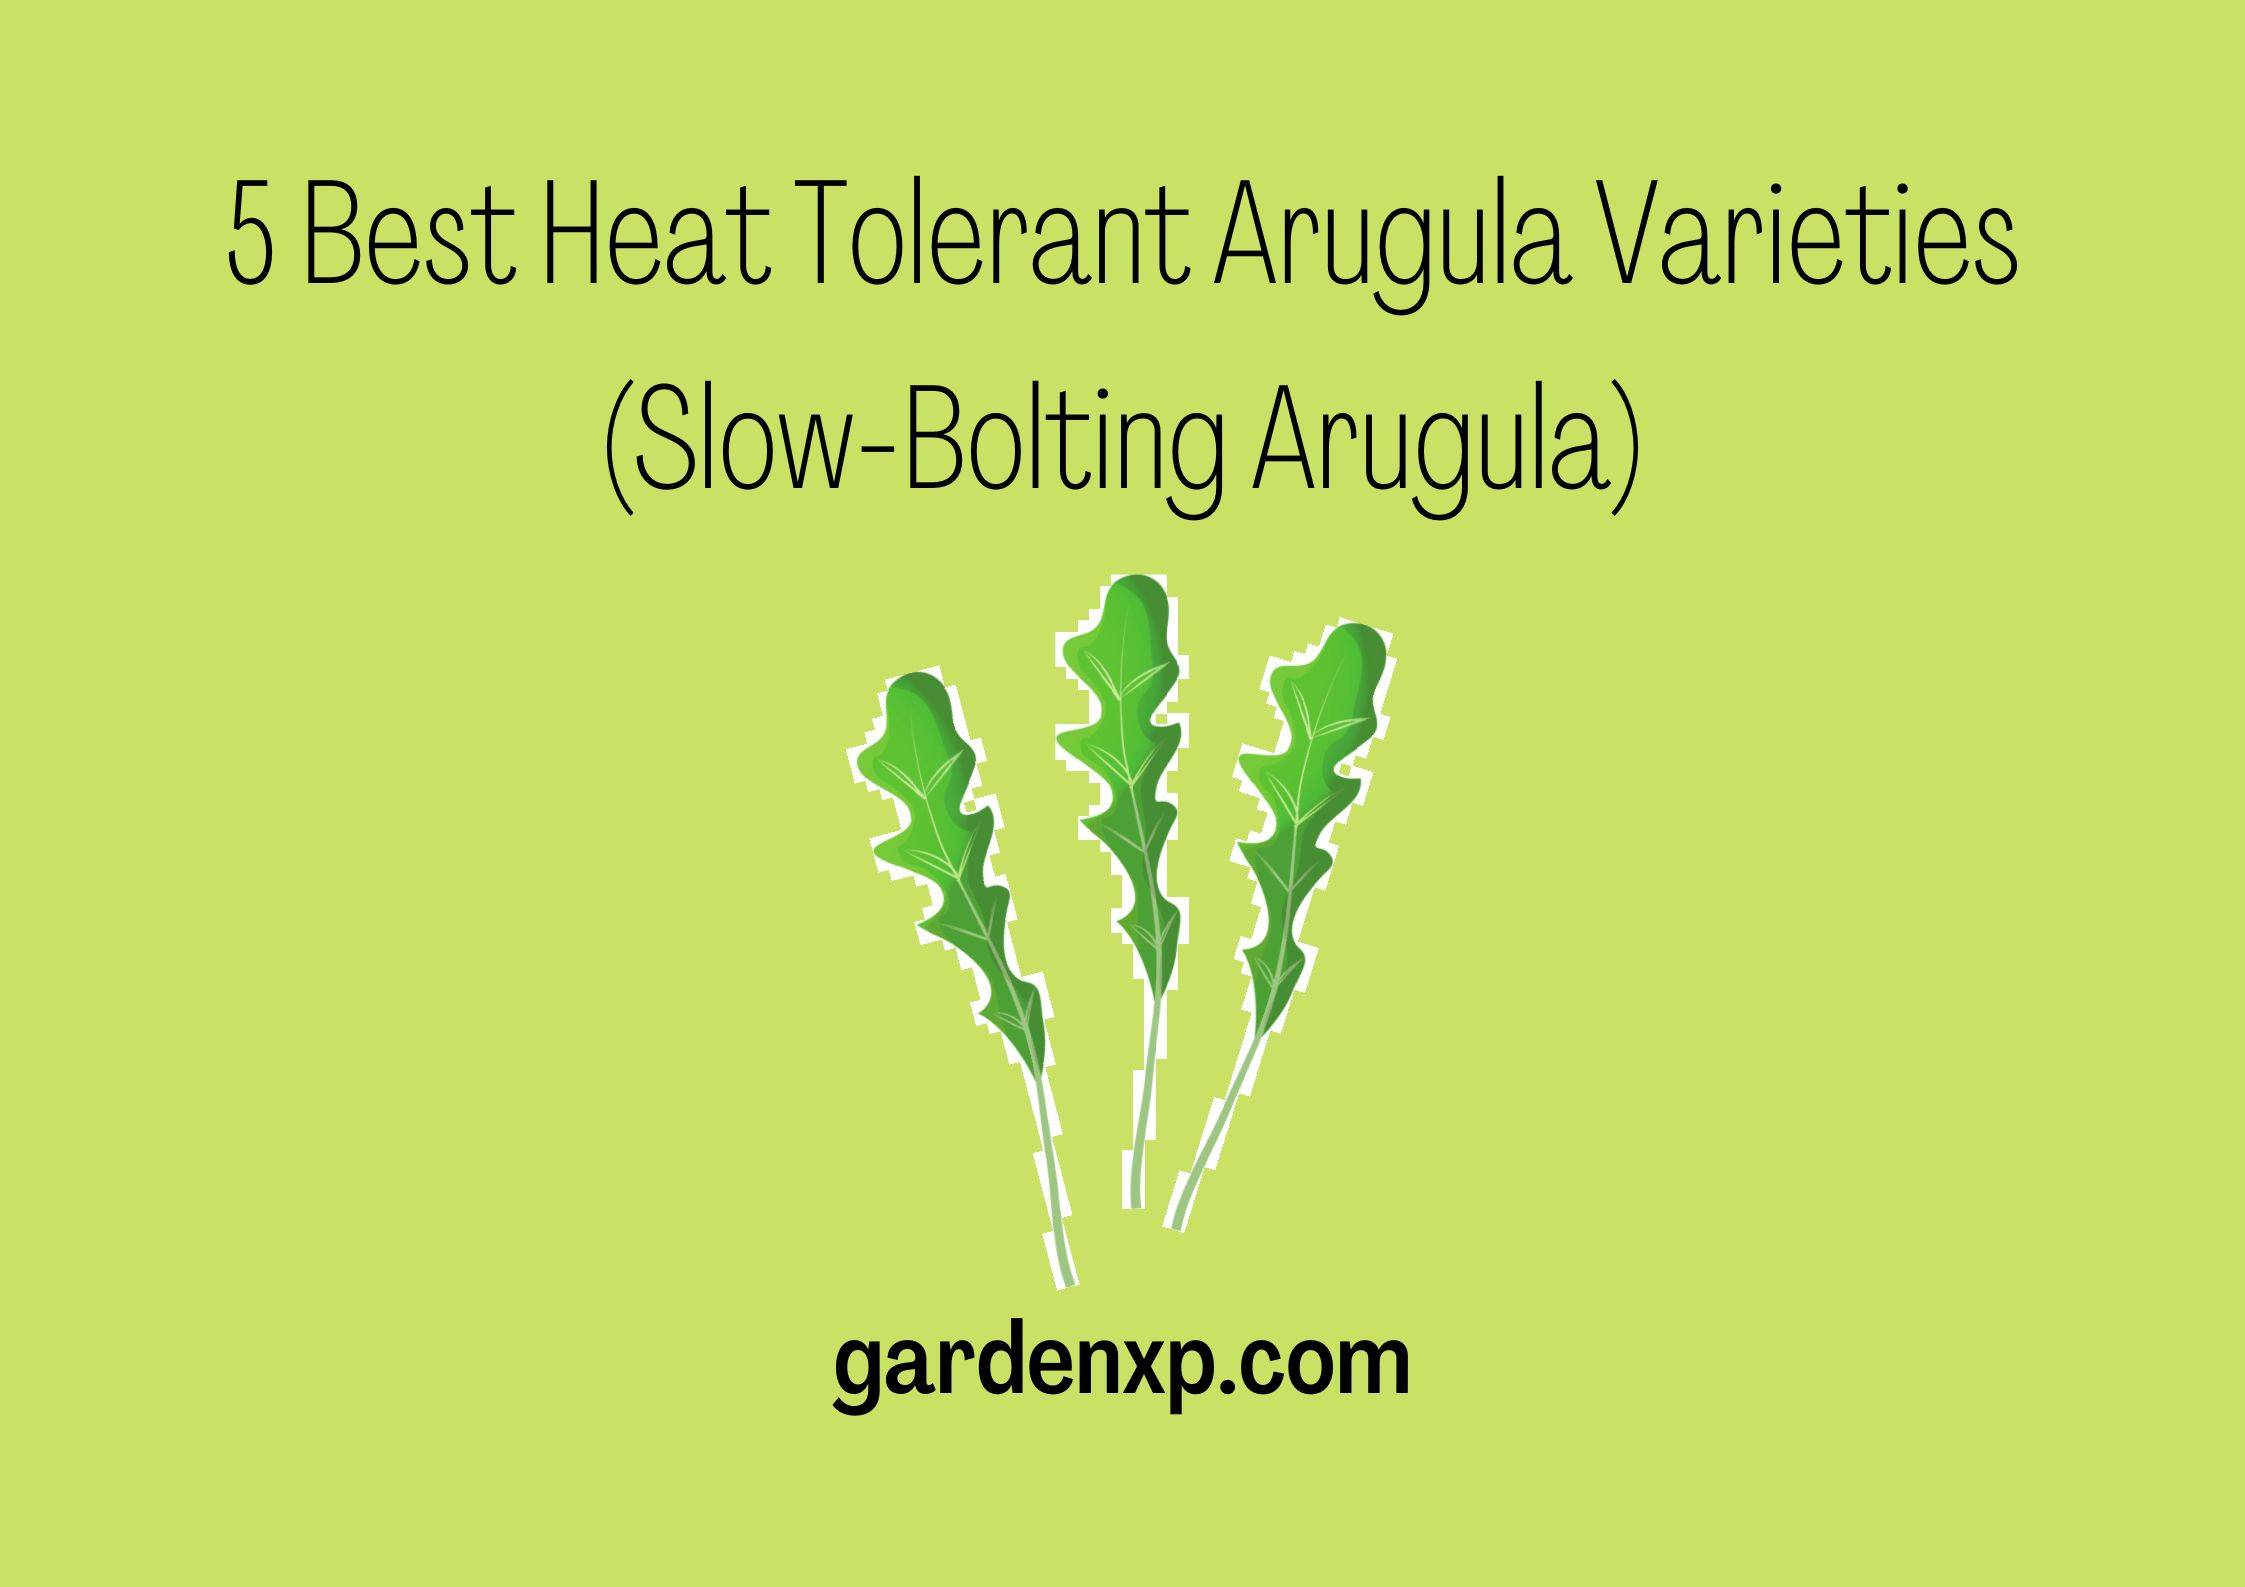 5 Best Heat Tolerant Arugula Varieties (Slow-Bolting Arugula)